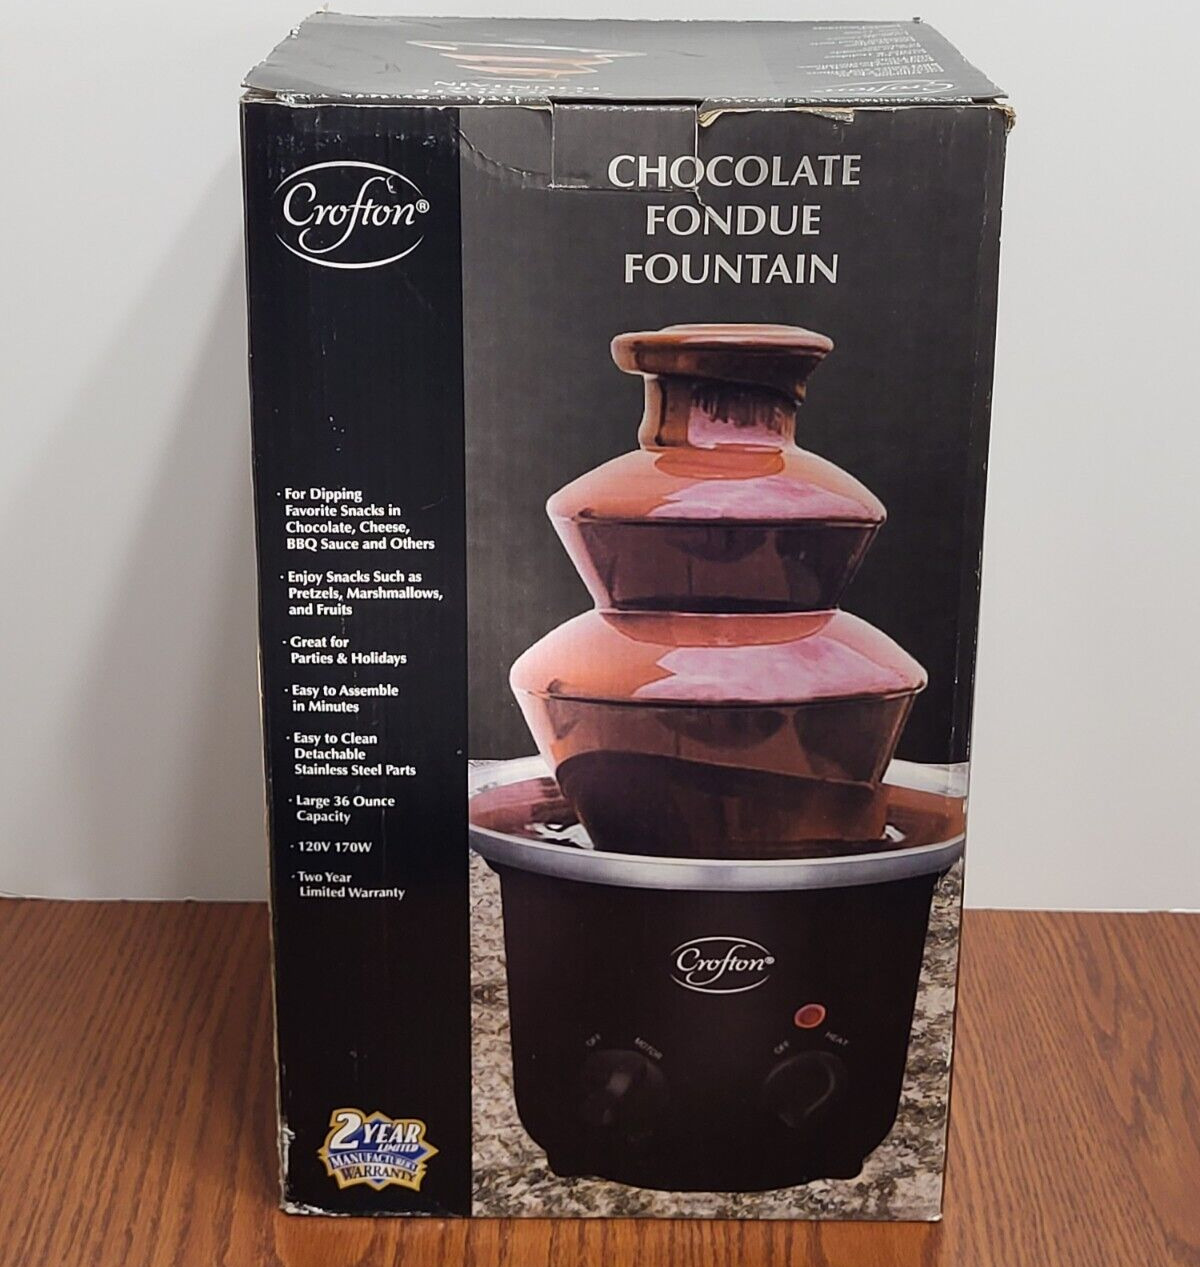 Crofton Chocolate Fondue Fountain 3 Tier Stainless Steel Tower 2-pound Capacity